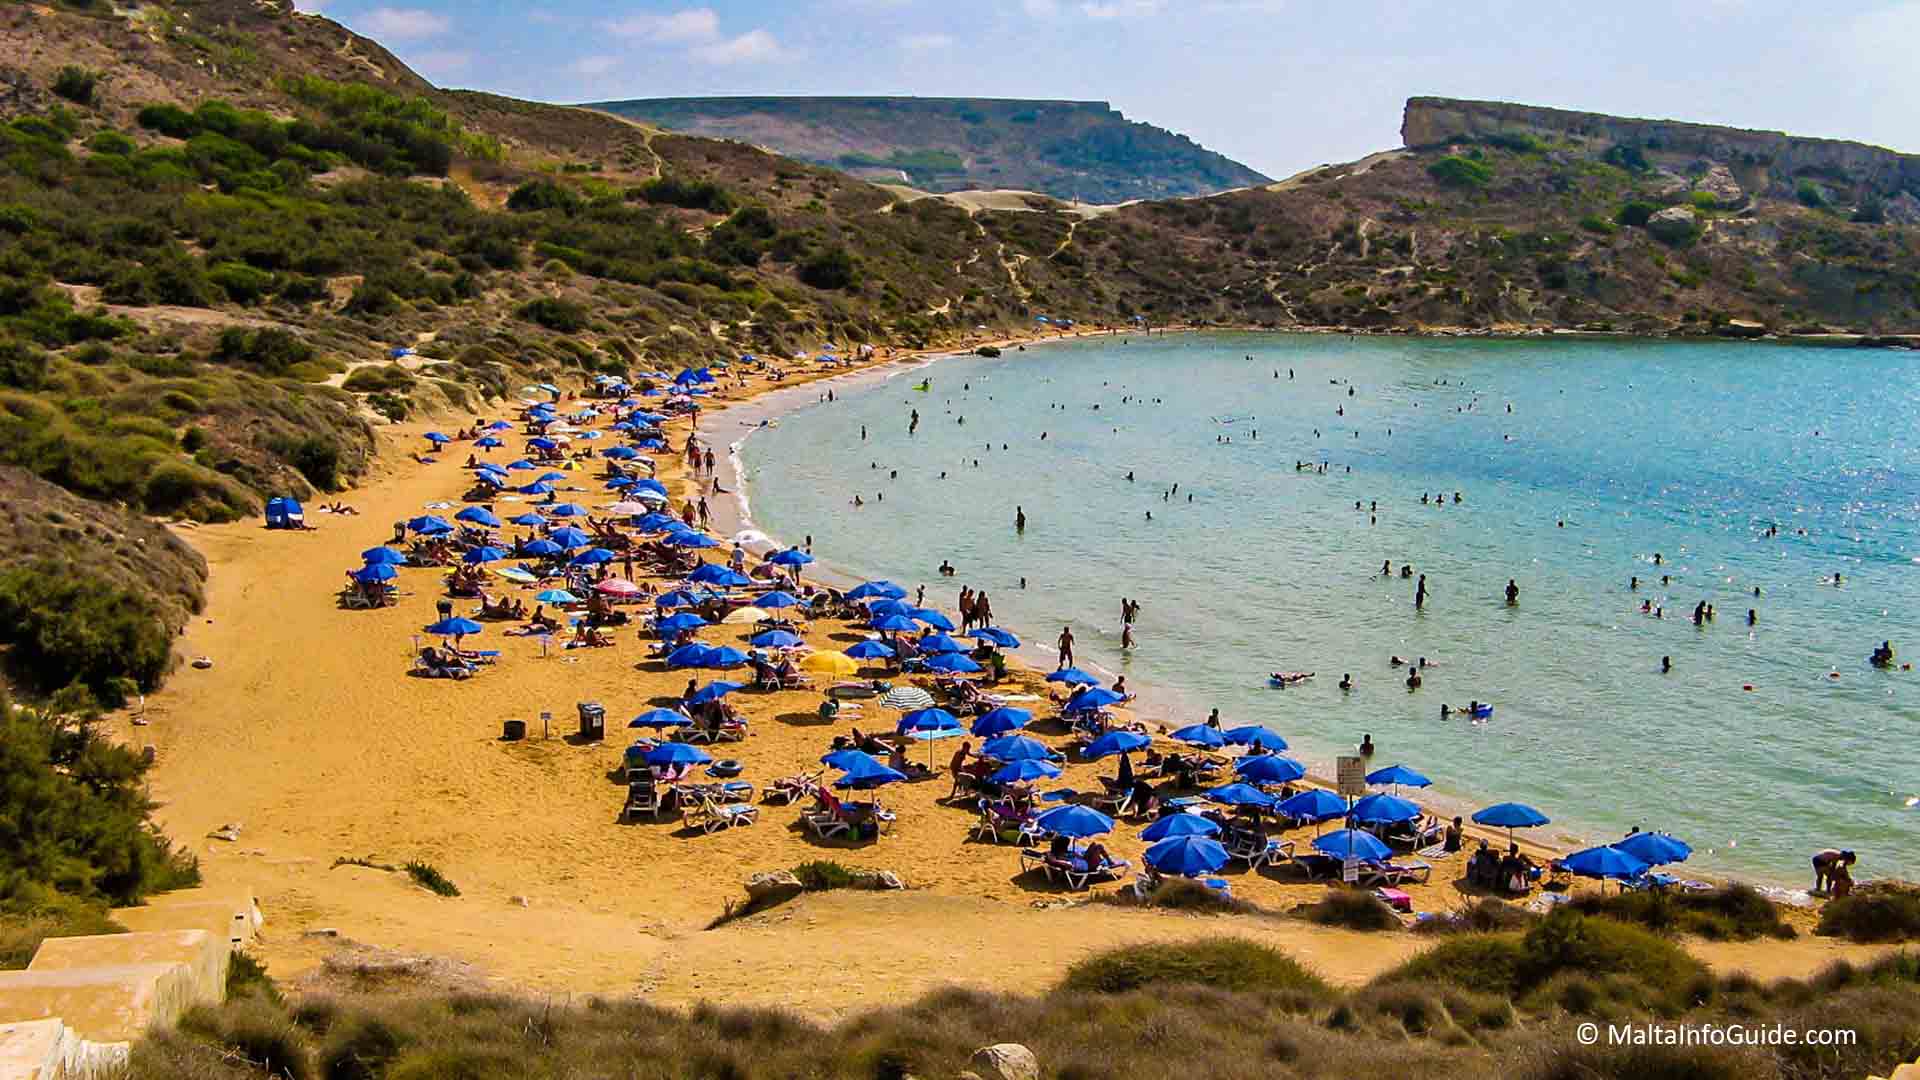 A view of Ghajn Tuffieha Bay Malta